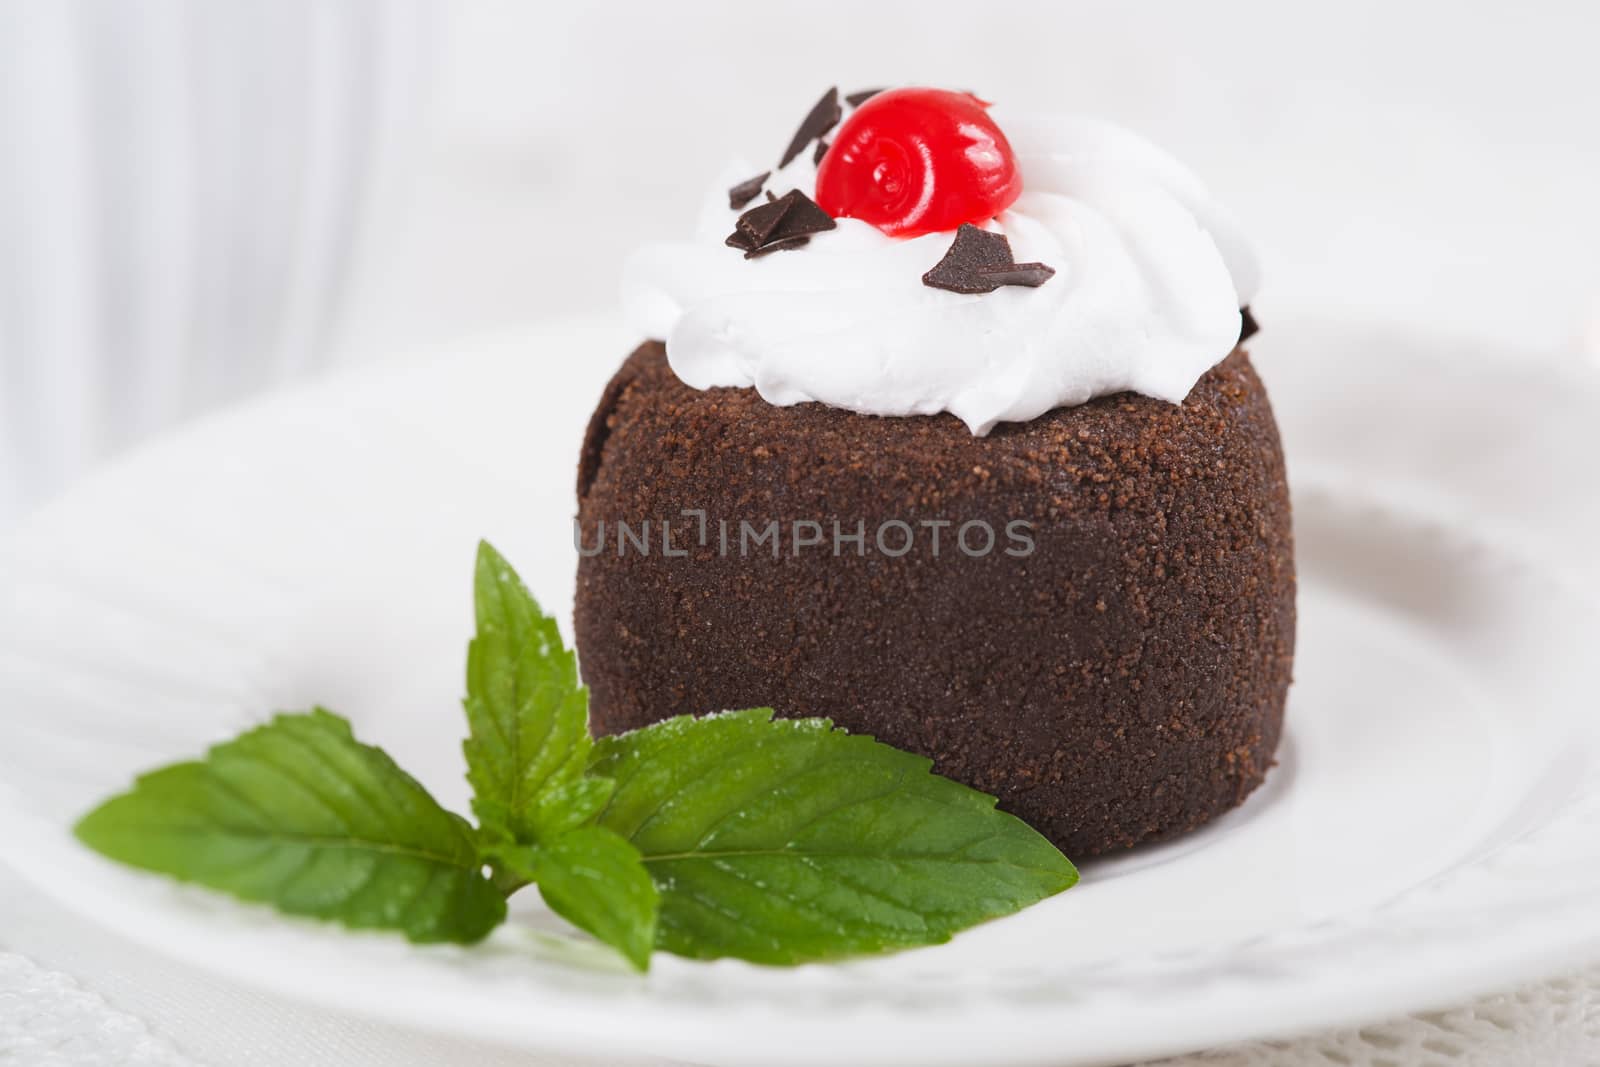 Chocolate sweet cake "Potato", selective focus by kzen